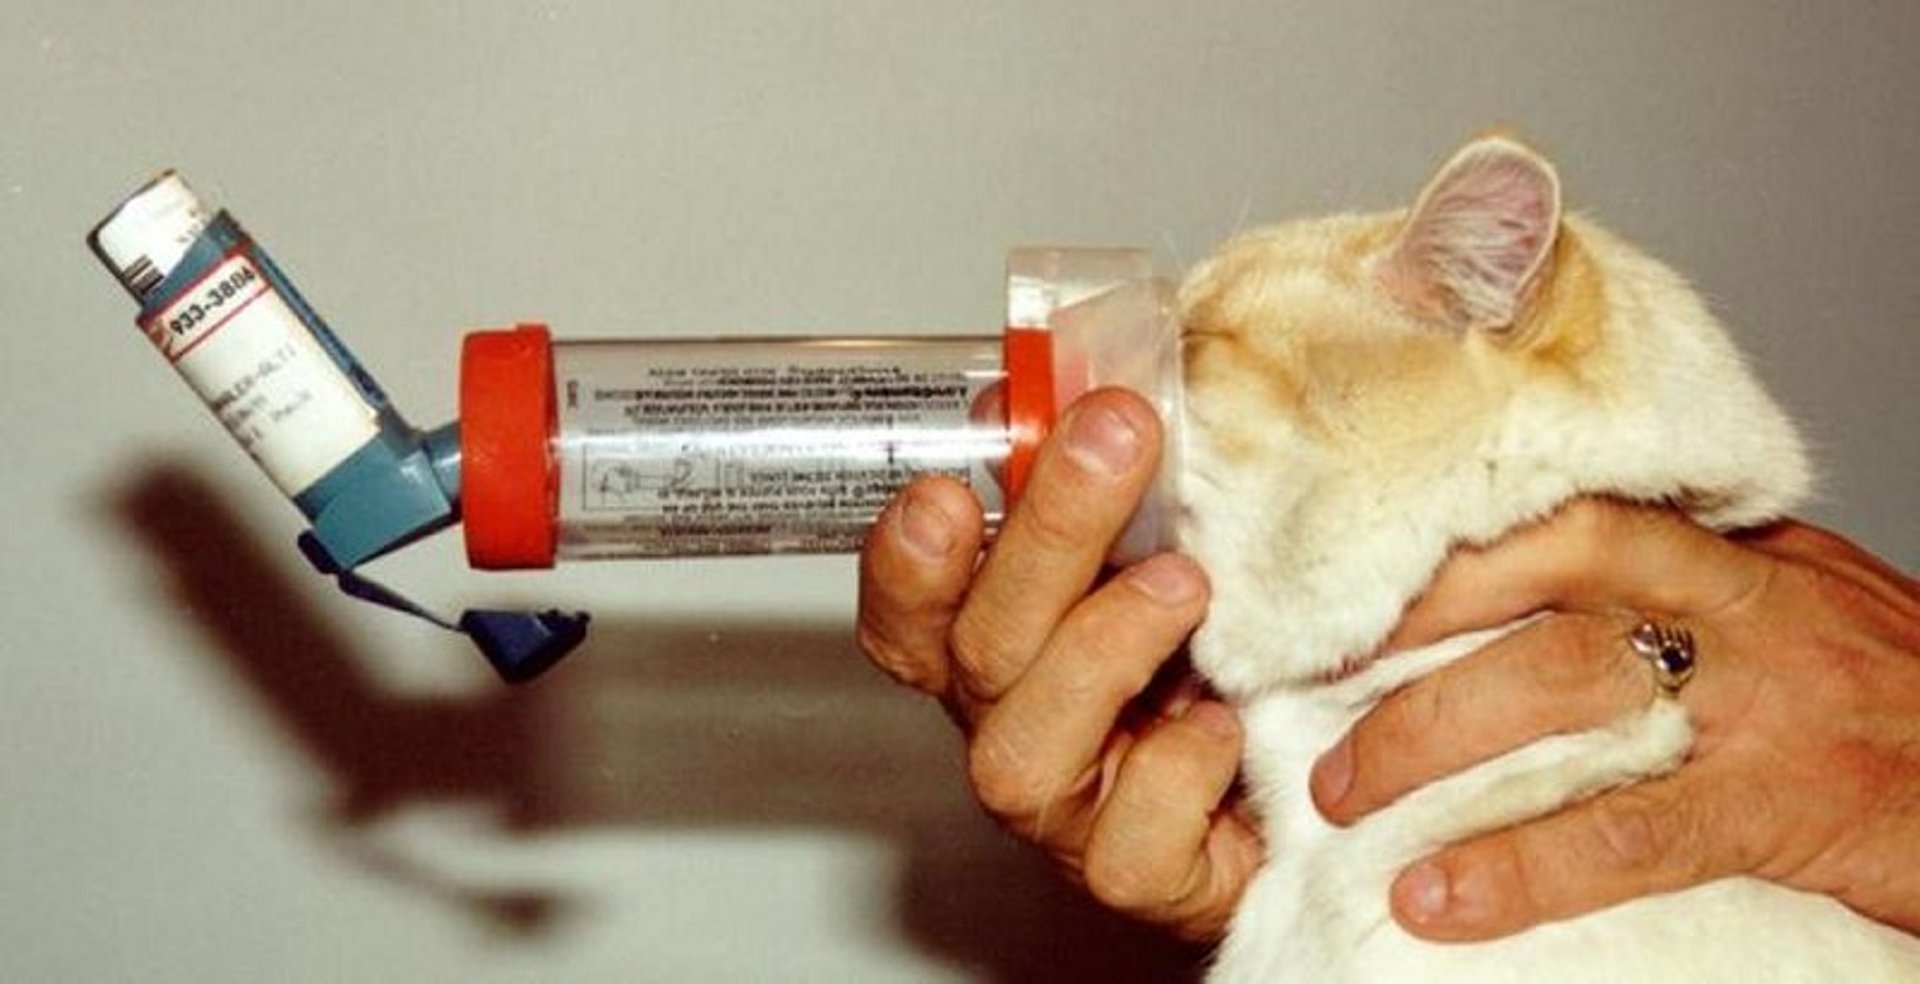 Metered-dose inhaler with spacer, cat